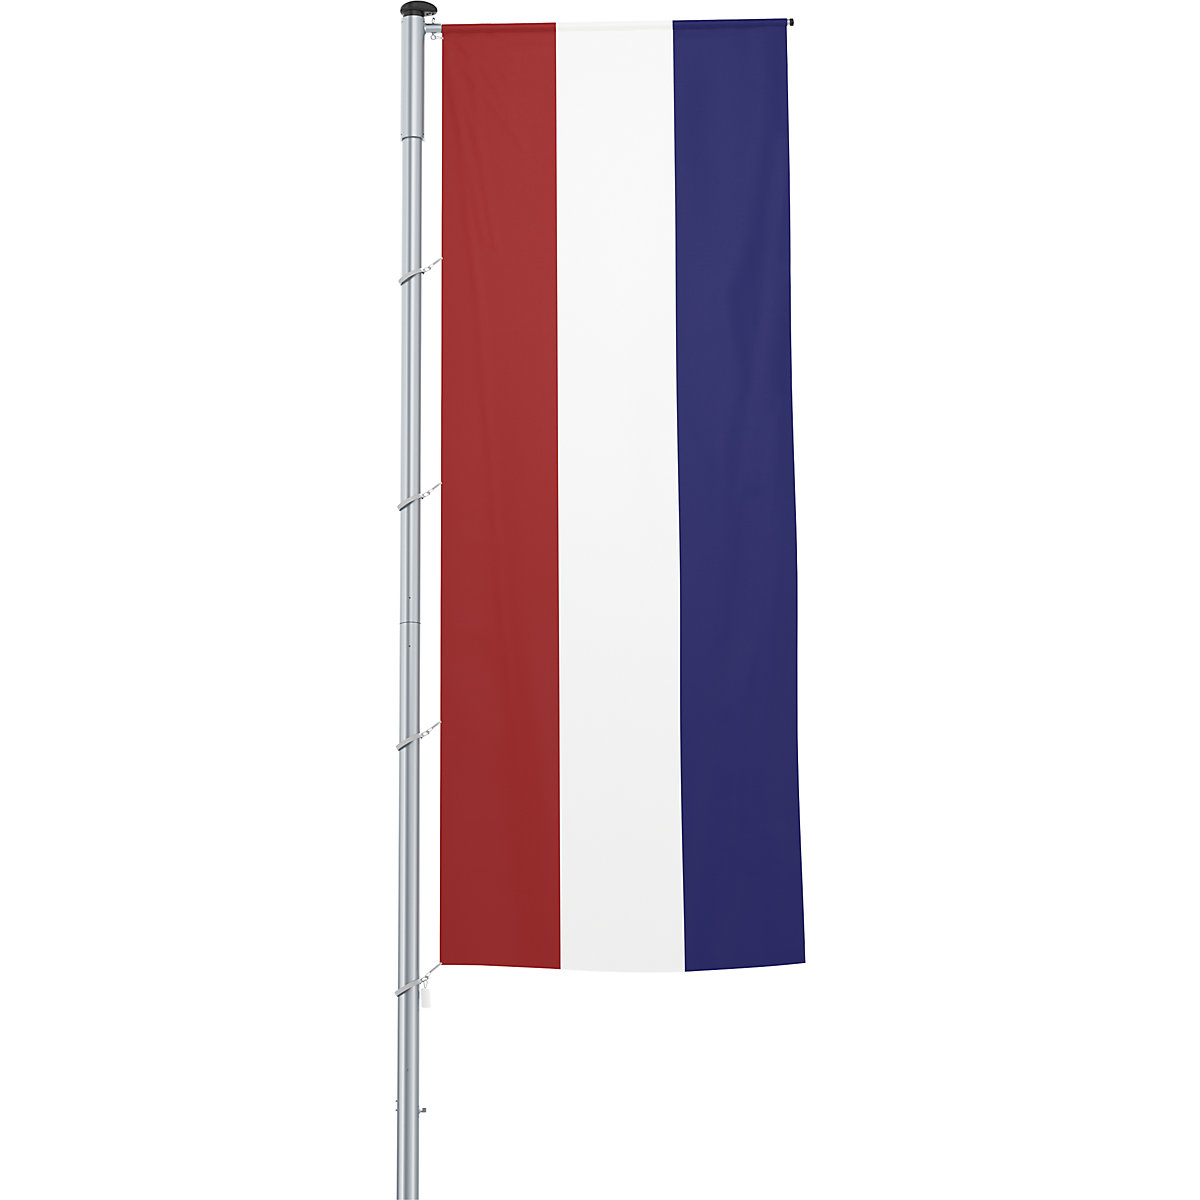 Steag pentru braț/drapel național – Mannus